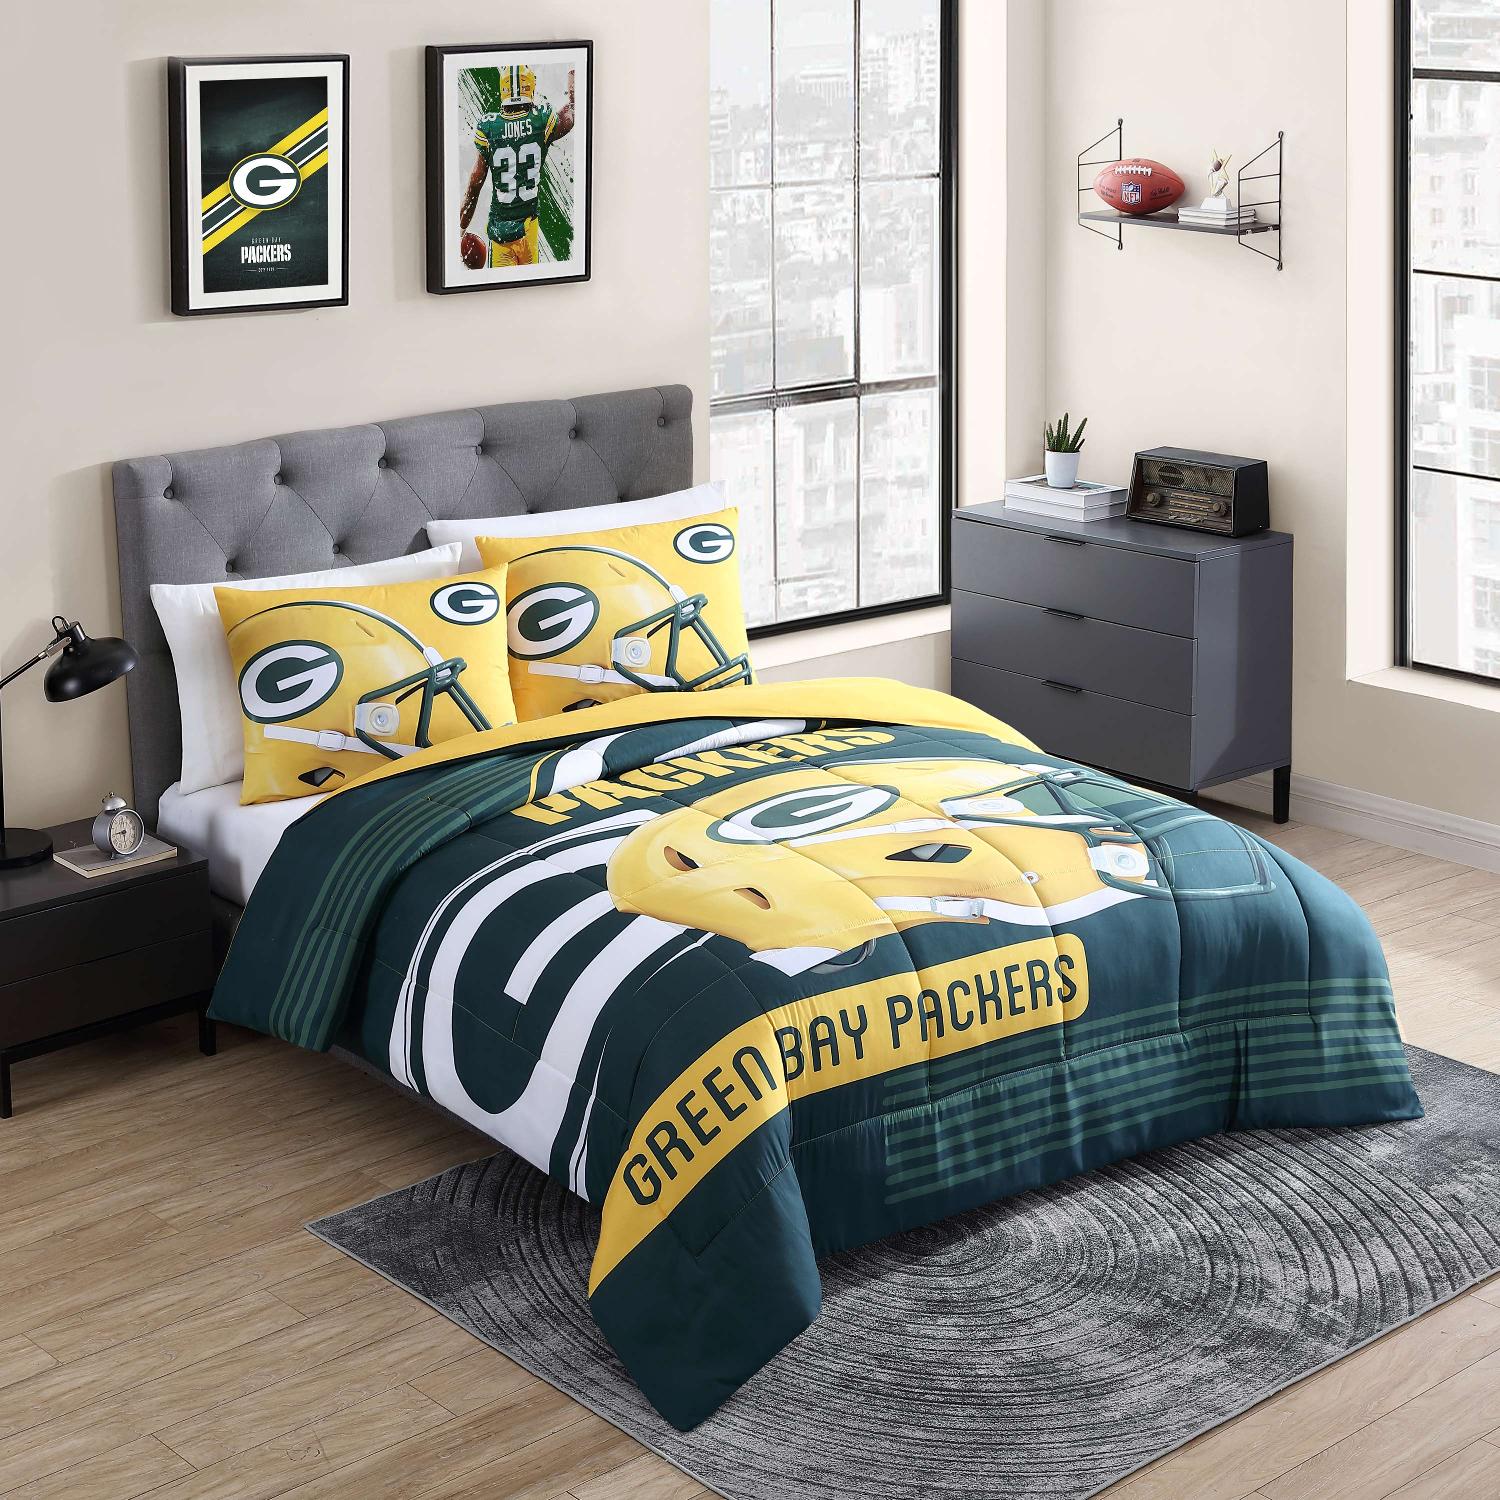 Green Bay Packers Comforter Set